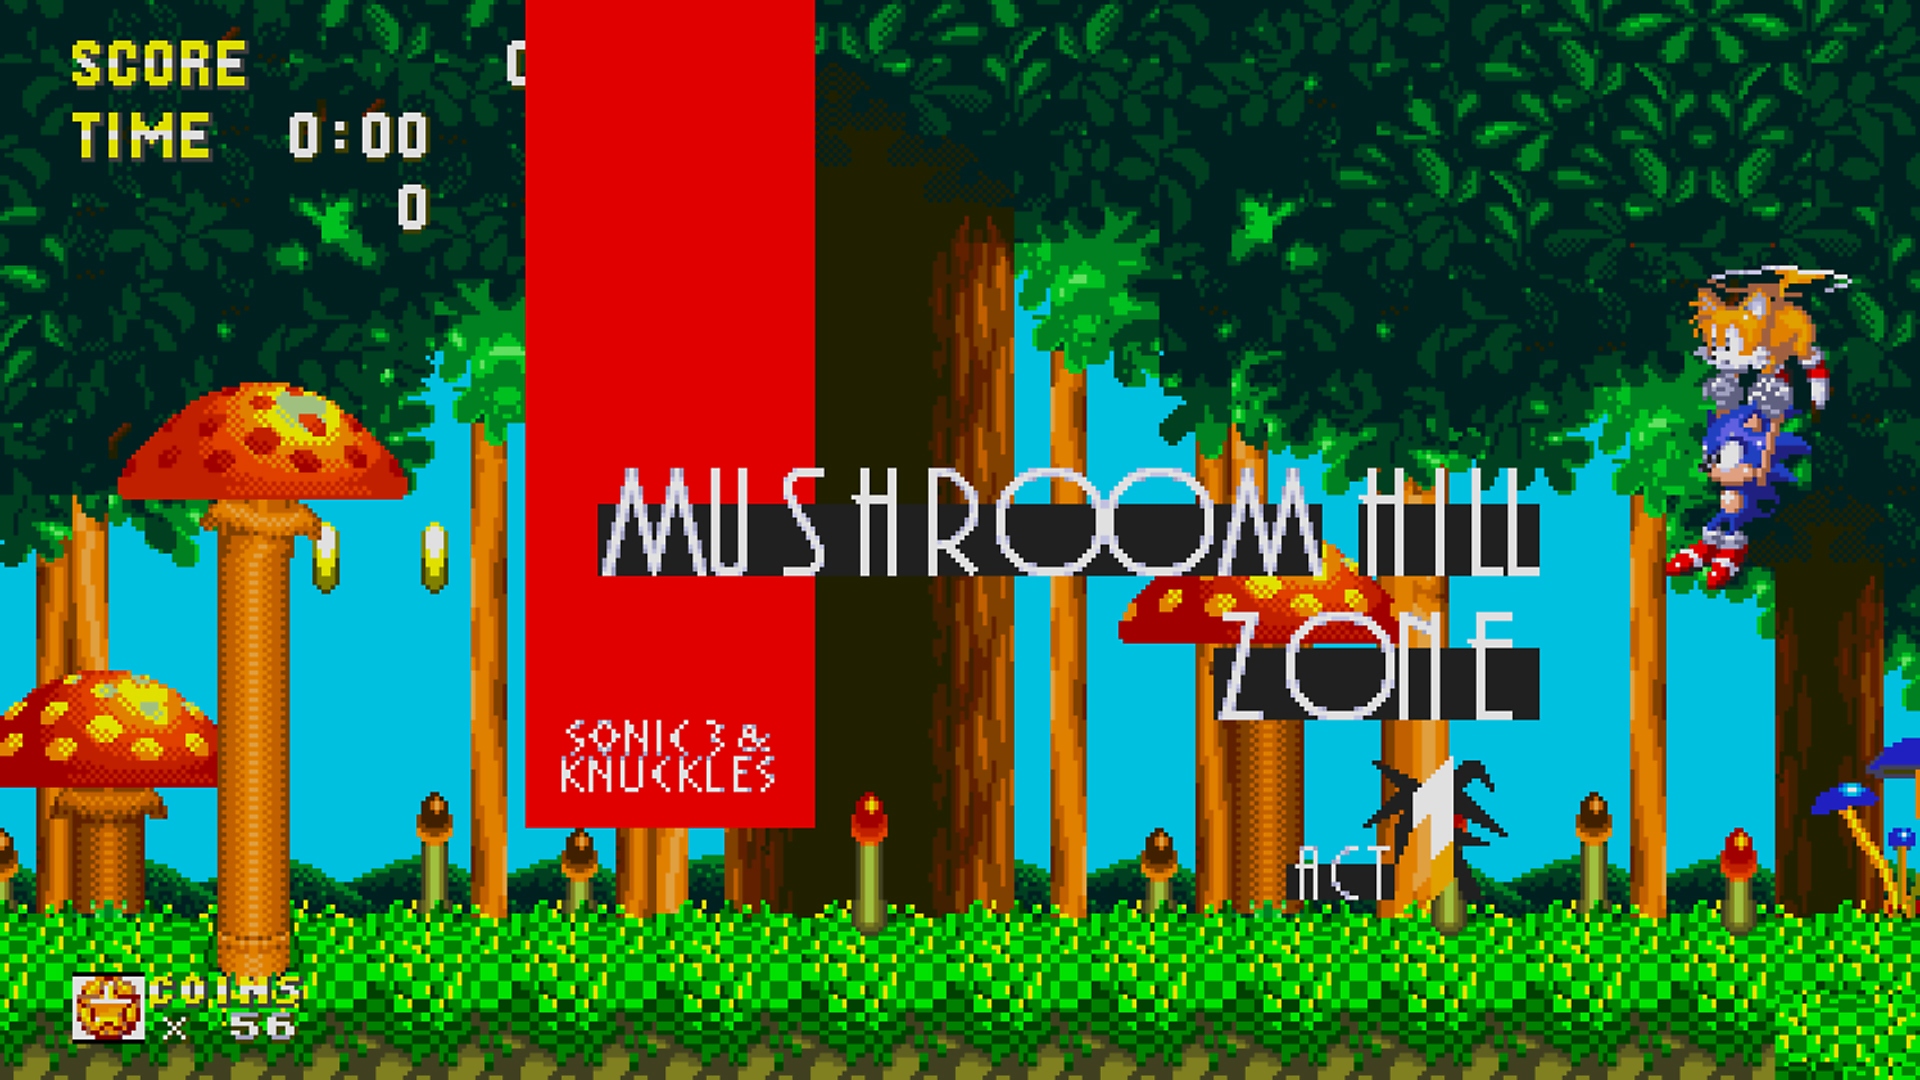 Sonic Origins screenshot showing title screen for Mushroom Zone